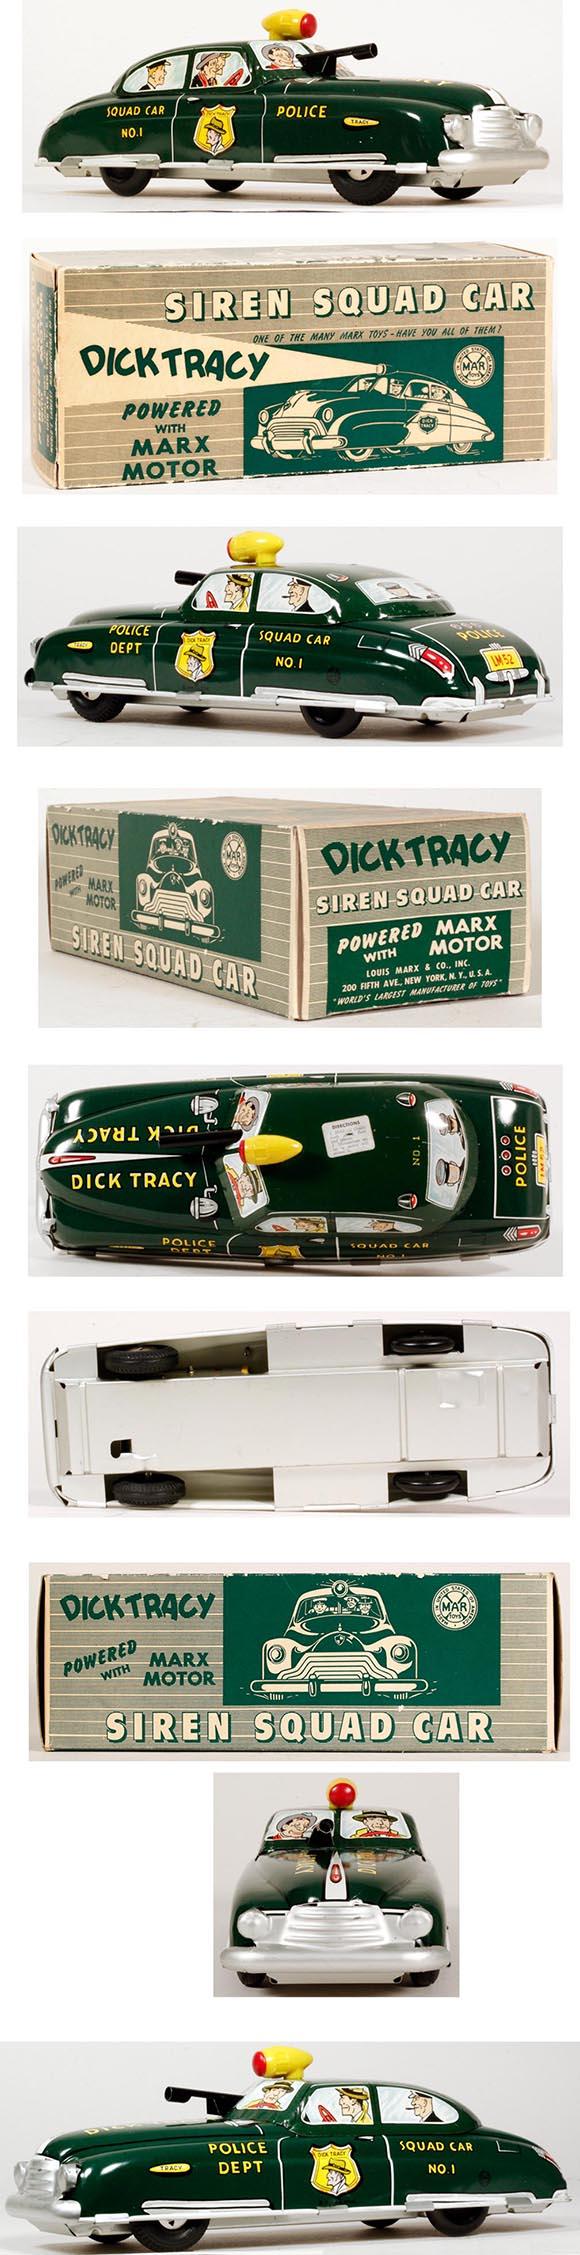 1949 Marx, Dick Tracy Siren Squad Car in Original Box